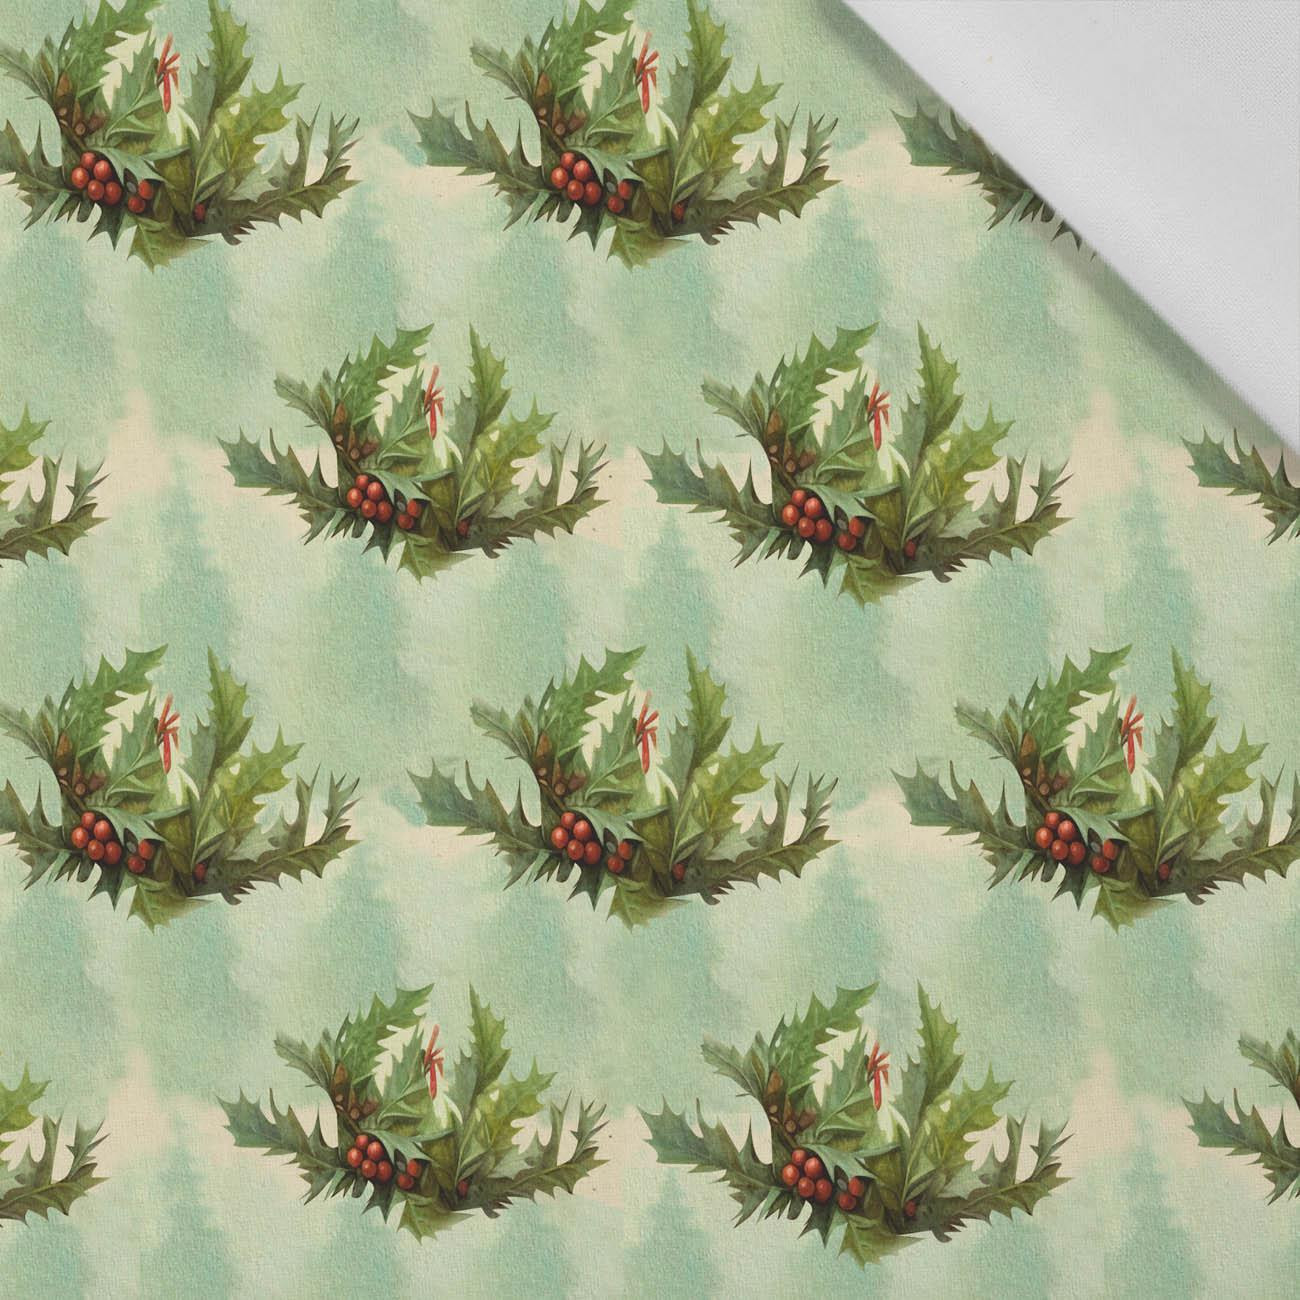 VINTAGE CHRISTMAS PAT. 4 - Cotton woven fabric